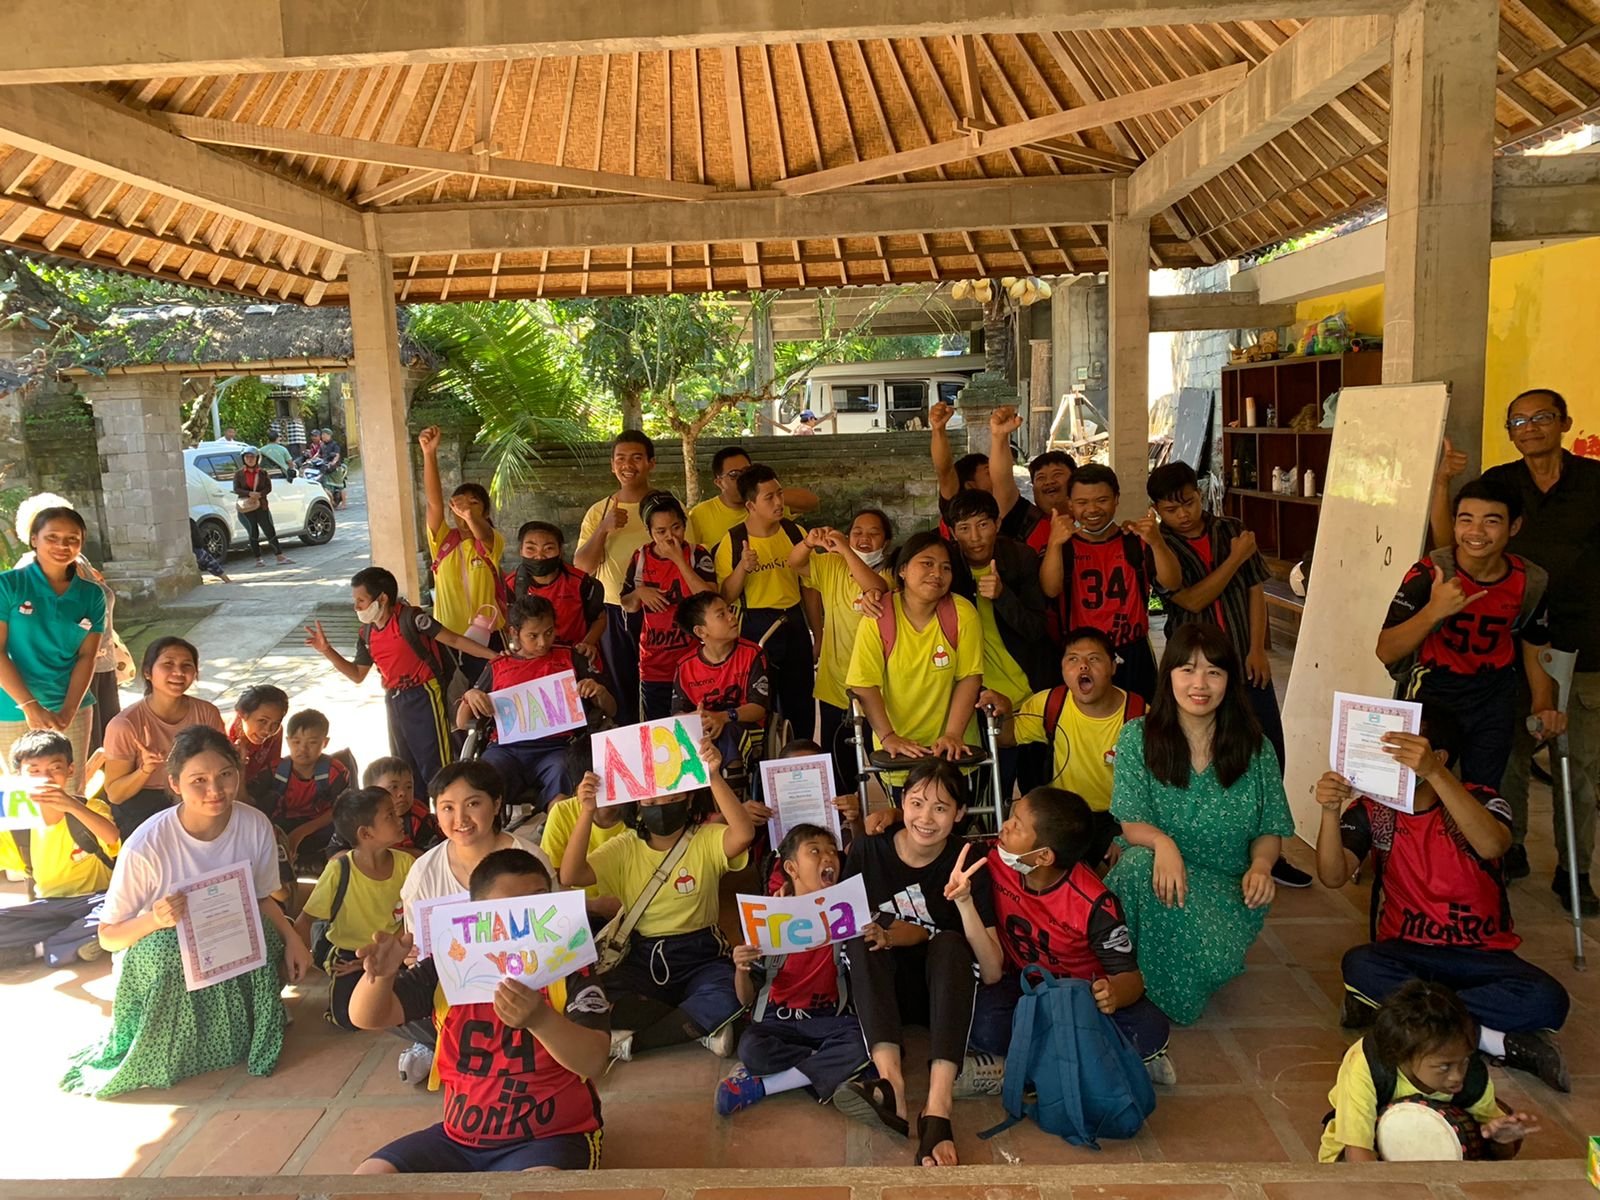 For Family Reisen soziales Engagement - Kinderhilfsprojekt Yayasan Widya Guna auf Bali - Kinder